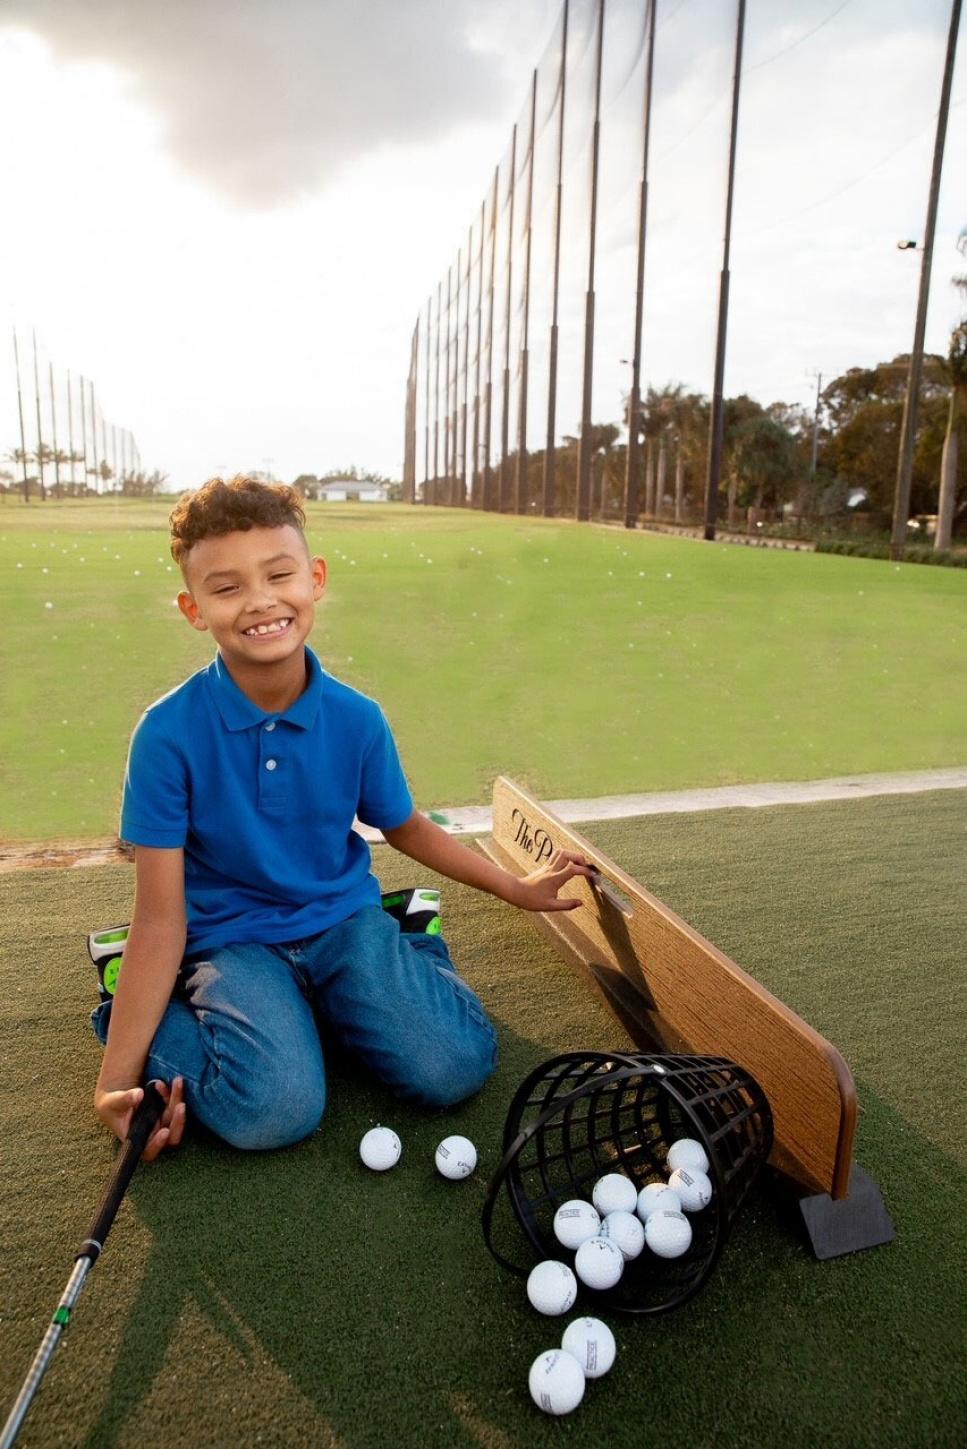 /content/dam/images/golfdigest/fullset/2024/2/kid-enjoying-golf-at-the-park.jpg